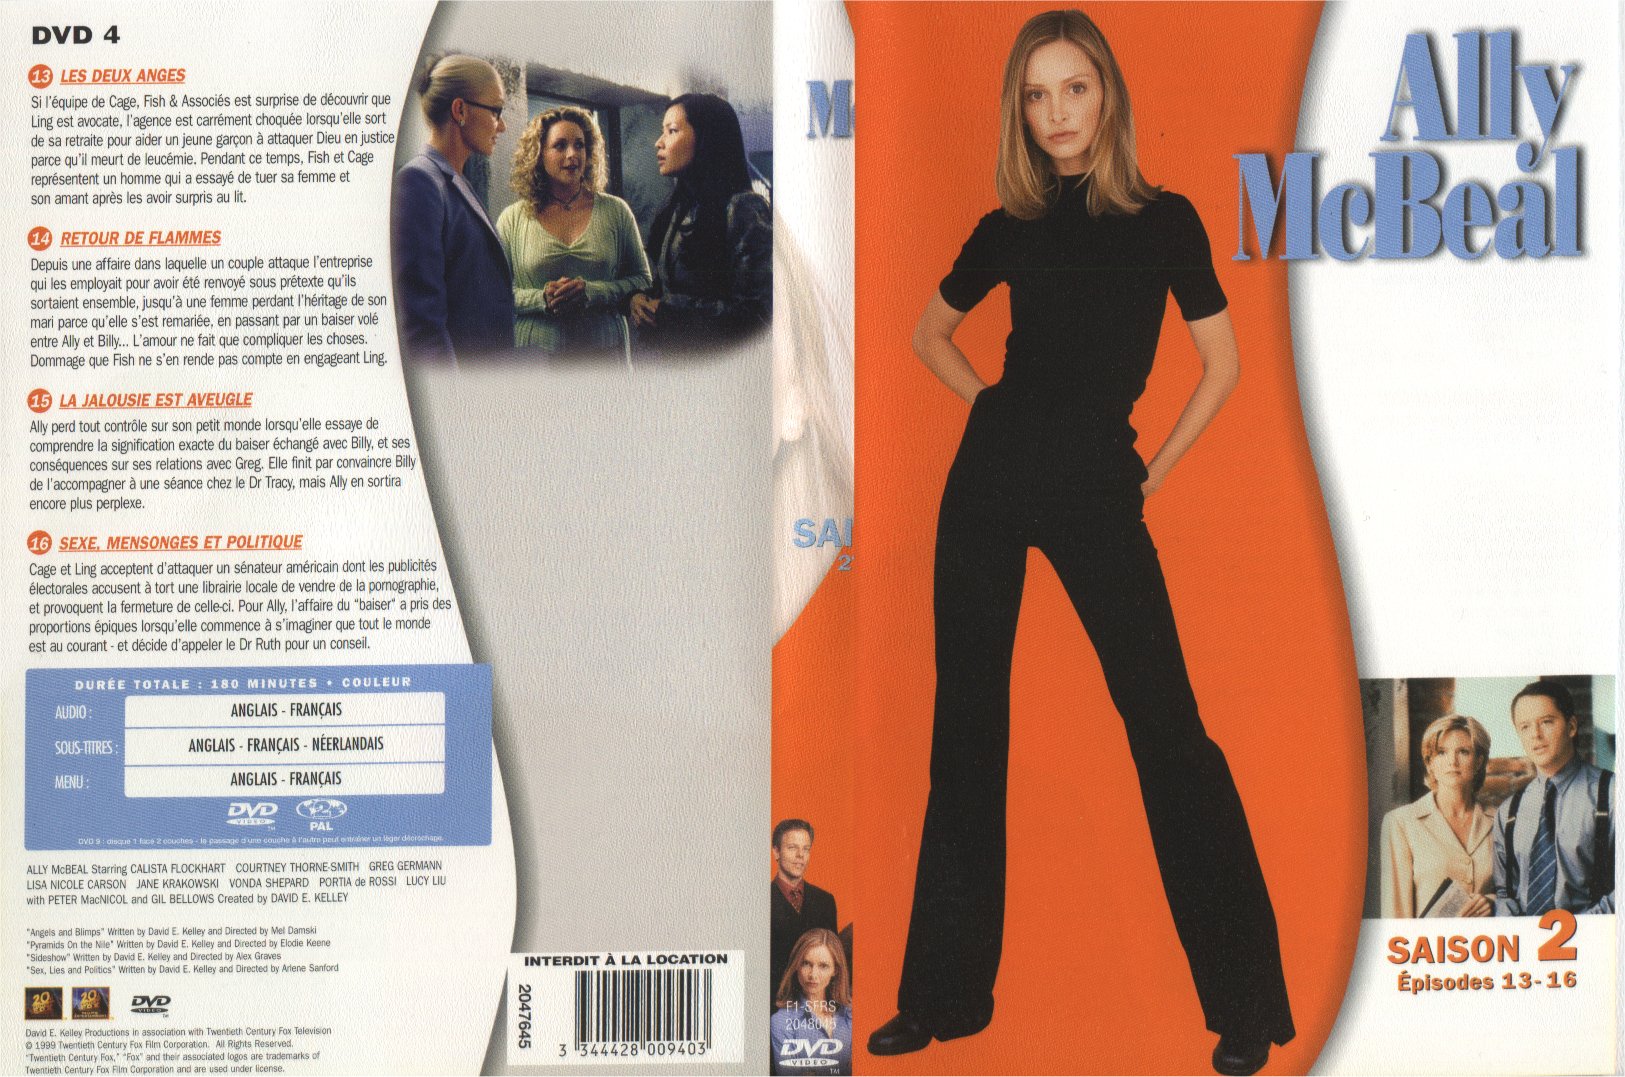 Jaquette DVD Ally McBeal saison 2 dvd 4